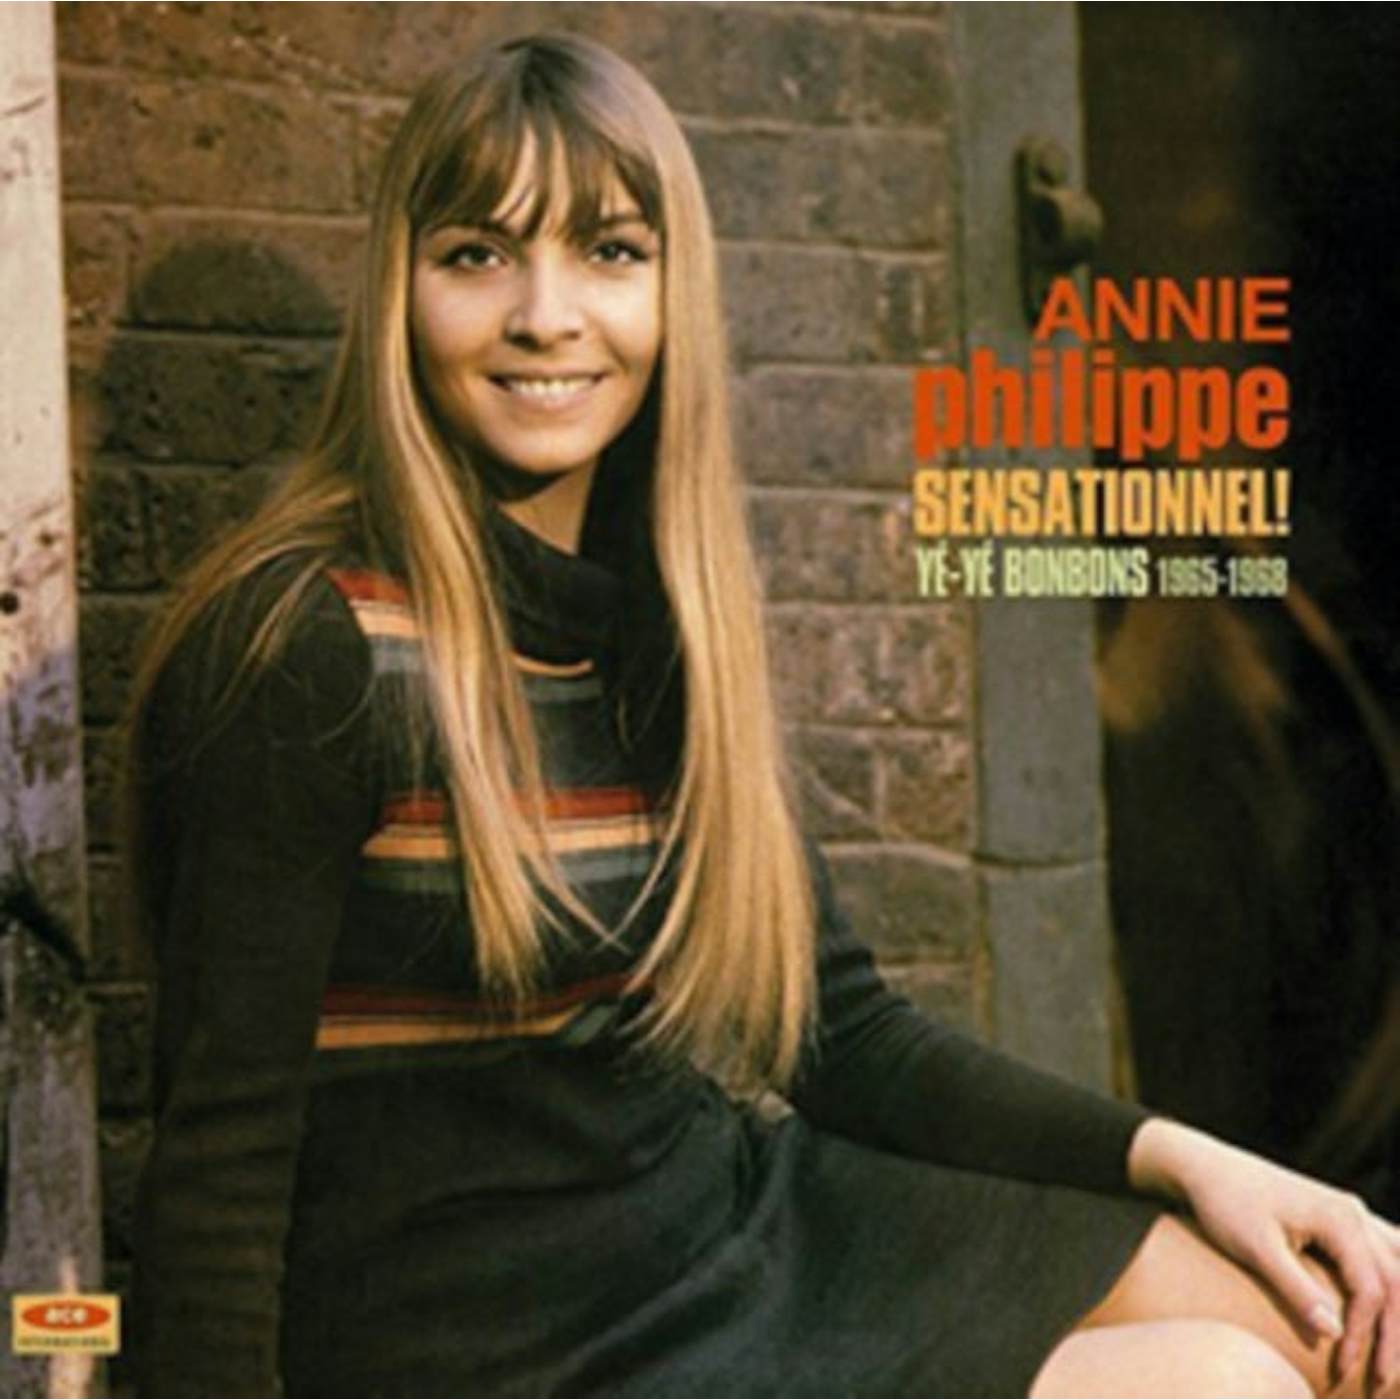 Annie Philippe LP - Sensationnel - Ye-Ye Bonbons 1965-1968 (Vinyl)